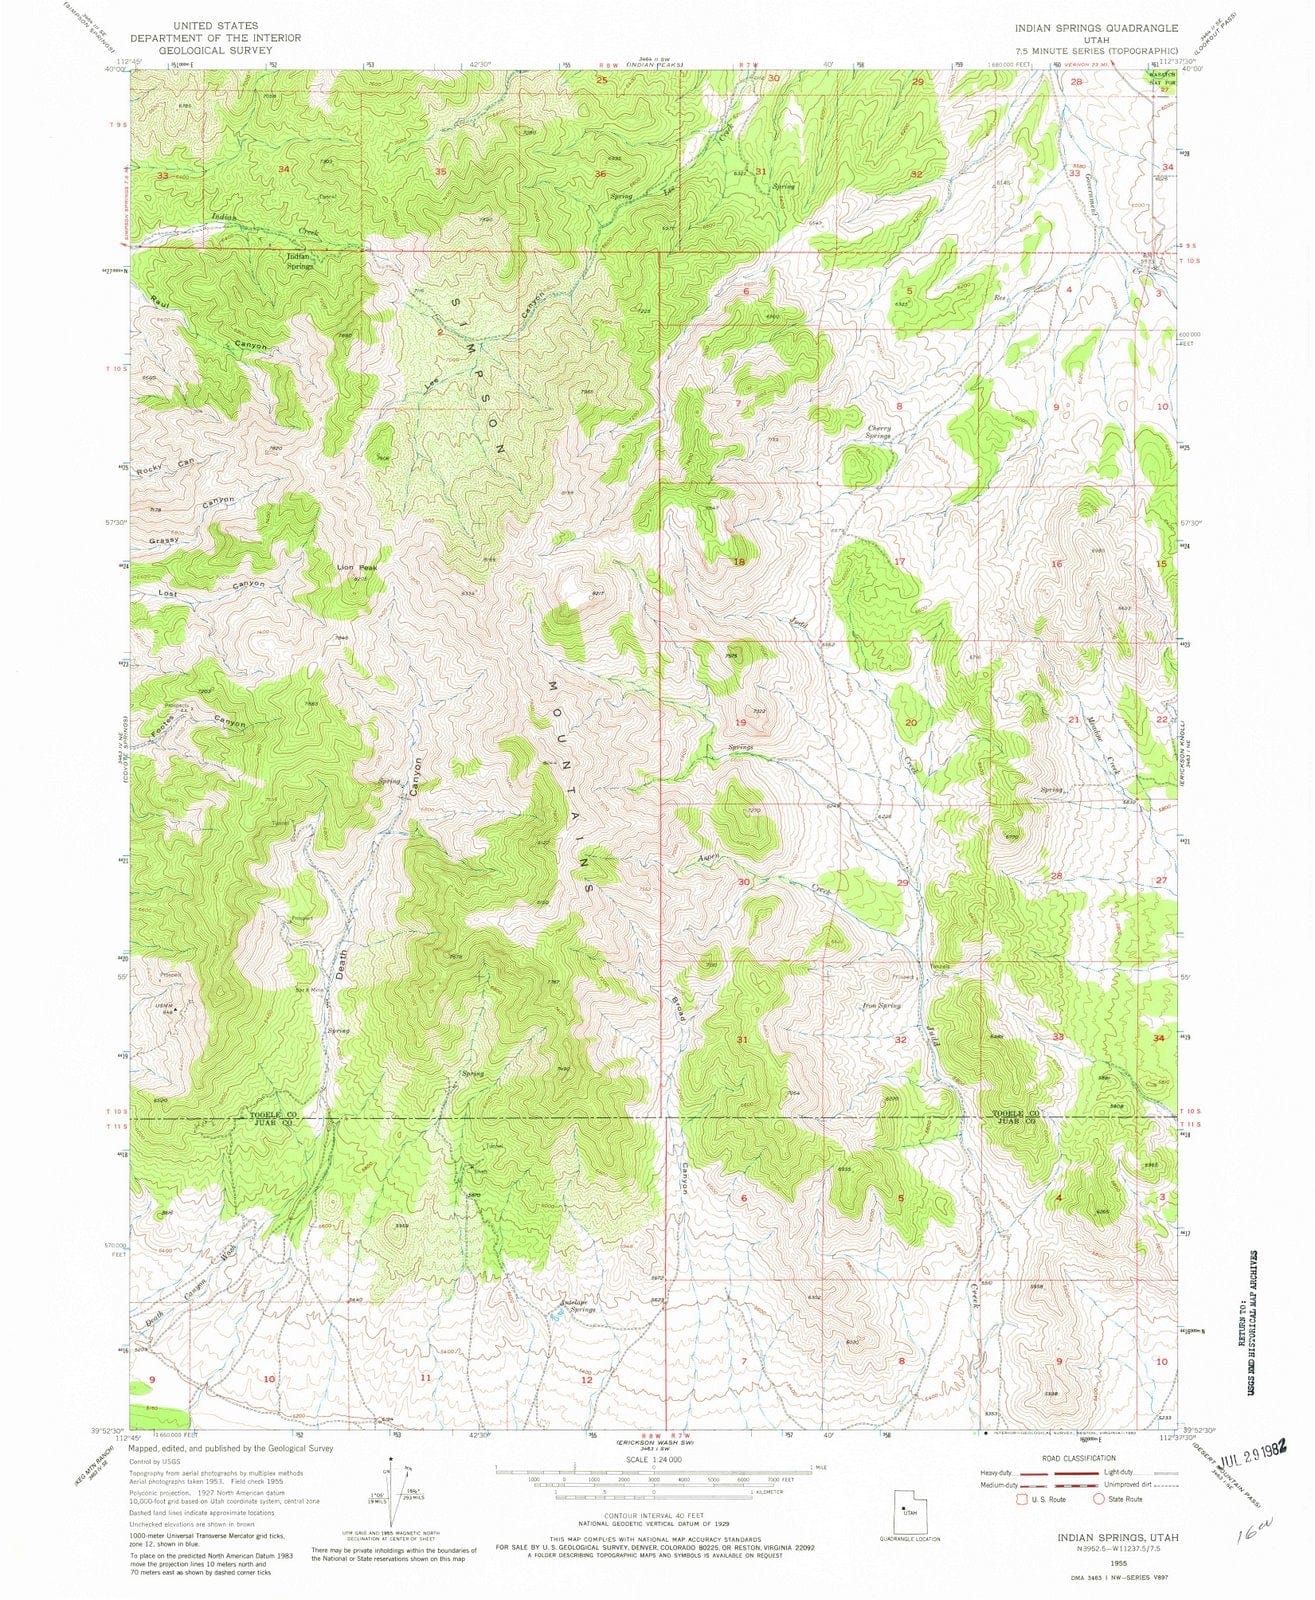 1955 Indian Springs, UT - Utah - USGS Topographic Map